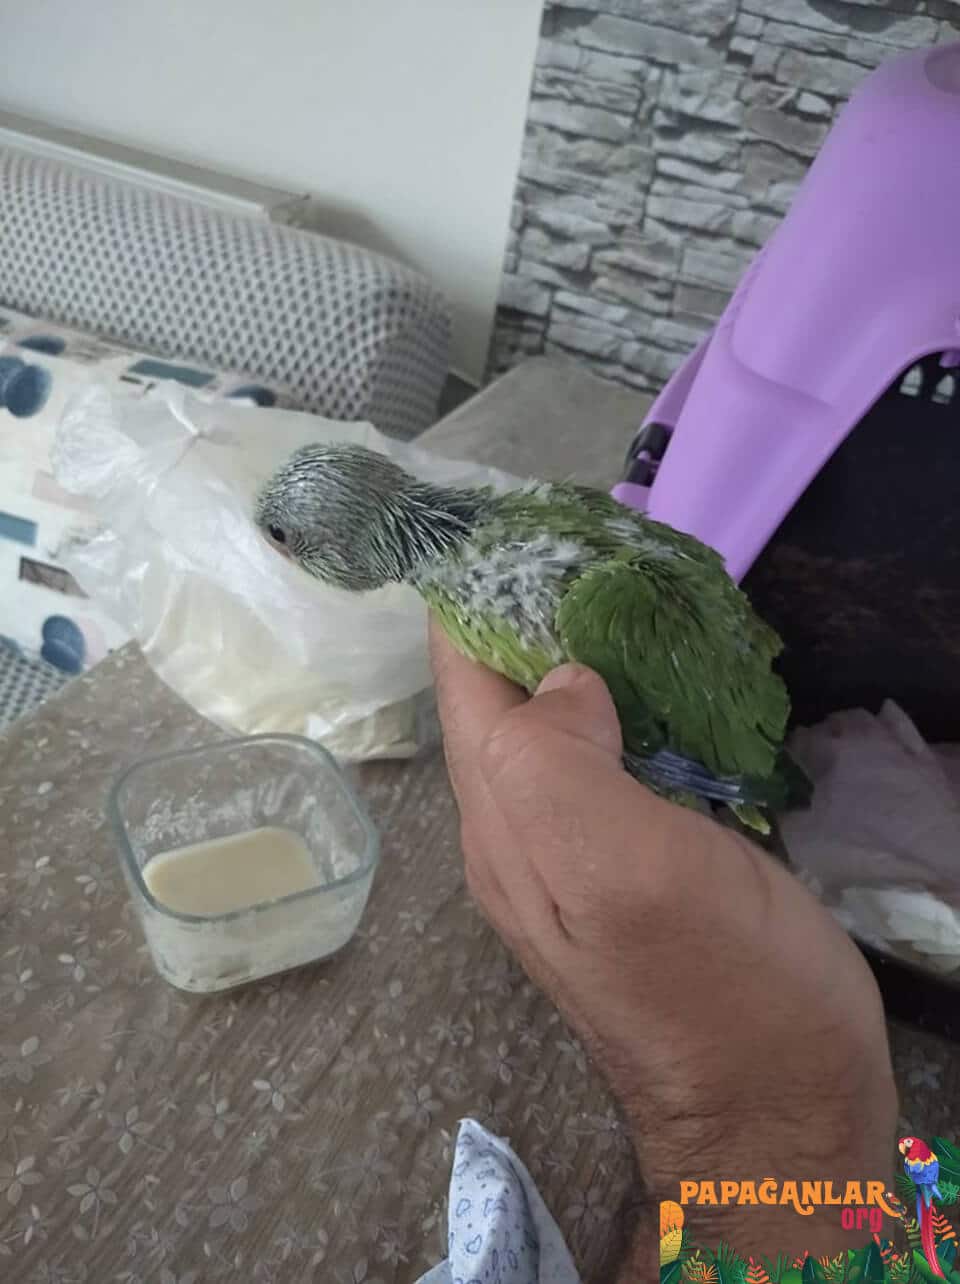 pakistani parrot prices 2019